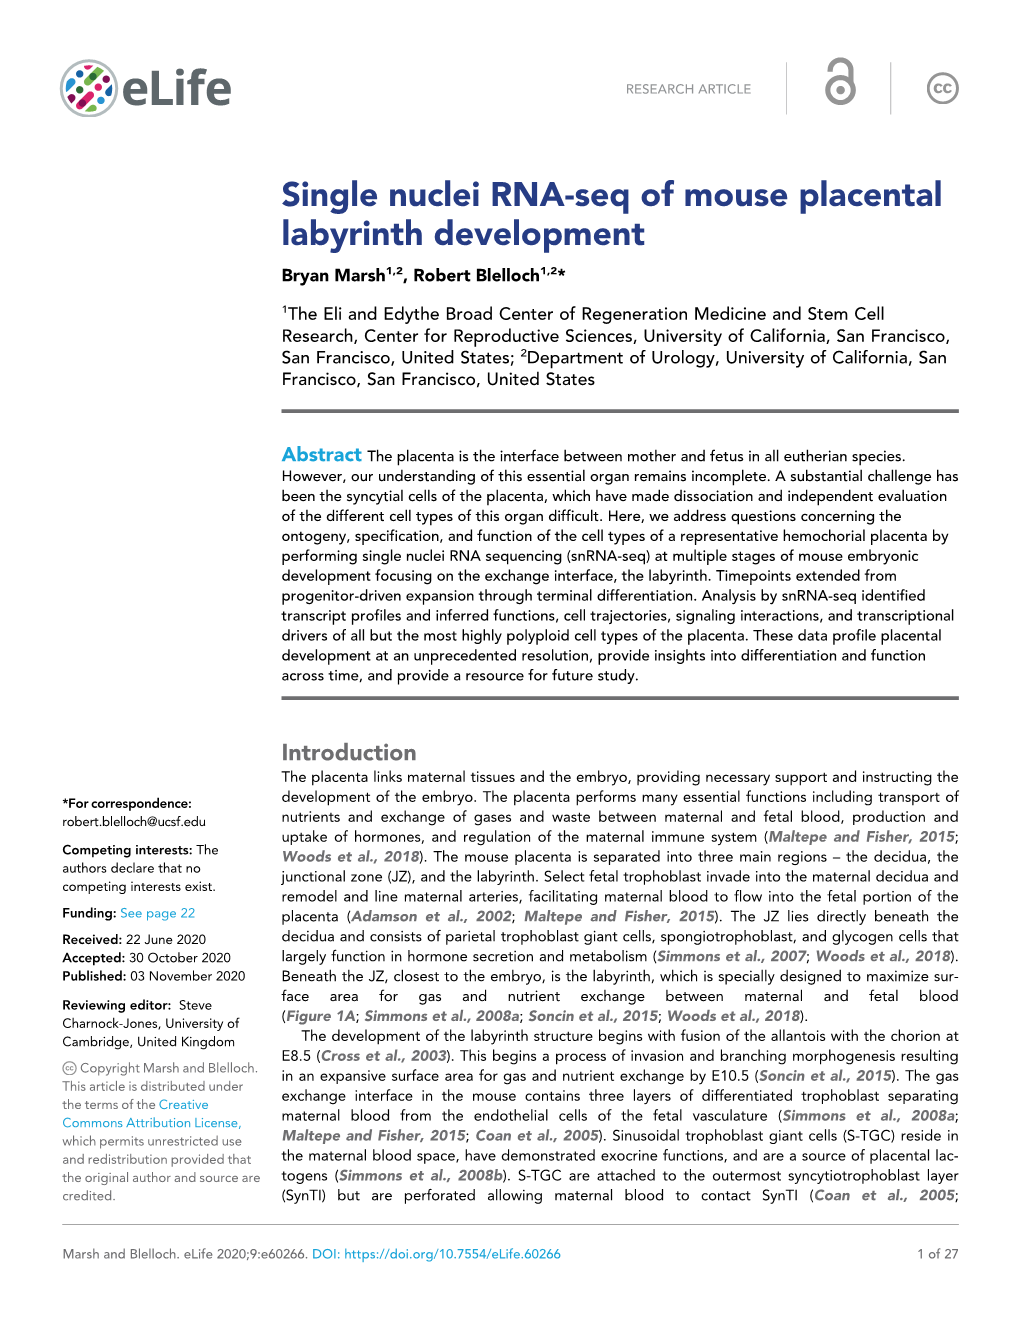 Single Nuclei RNA-Seq of Mouse Placental Labyrinth Development Bryan Marsh1,2, Robert Blelloch1,2*